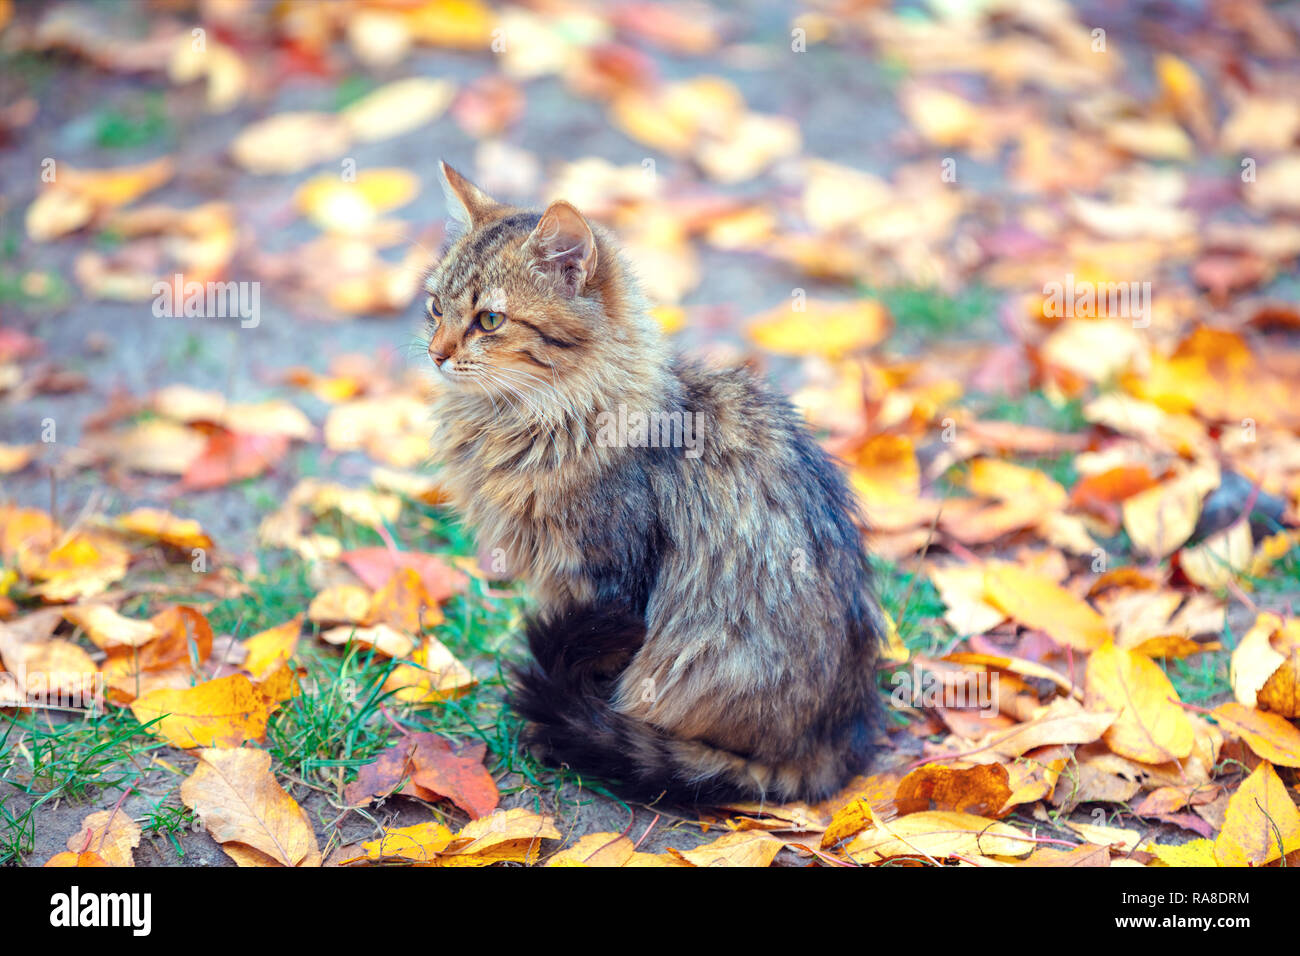 Cute siberian cat sitting on the fallen leaves in the autumn garden Stock Photo